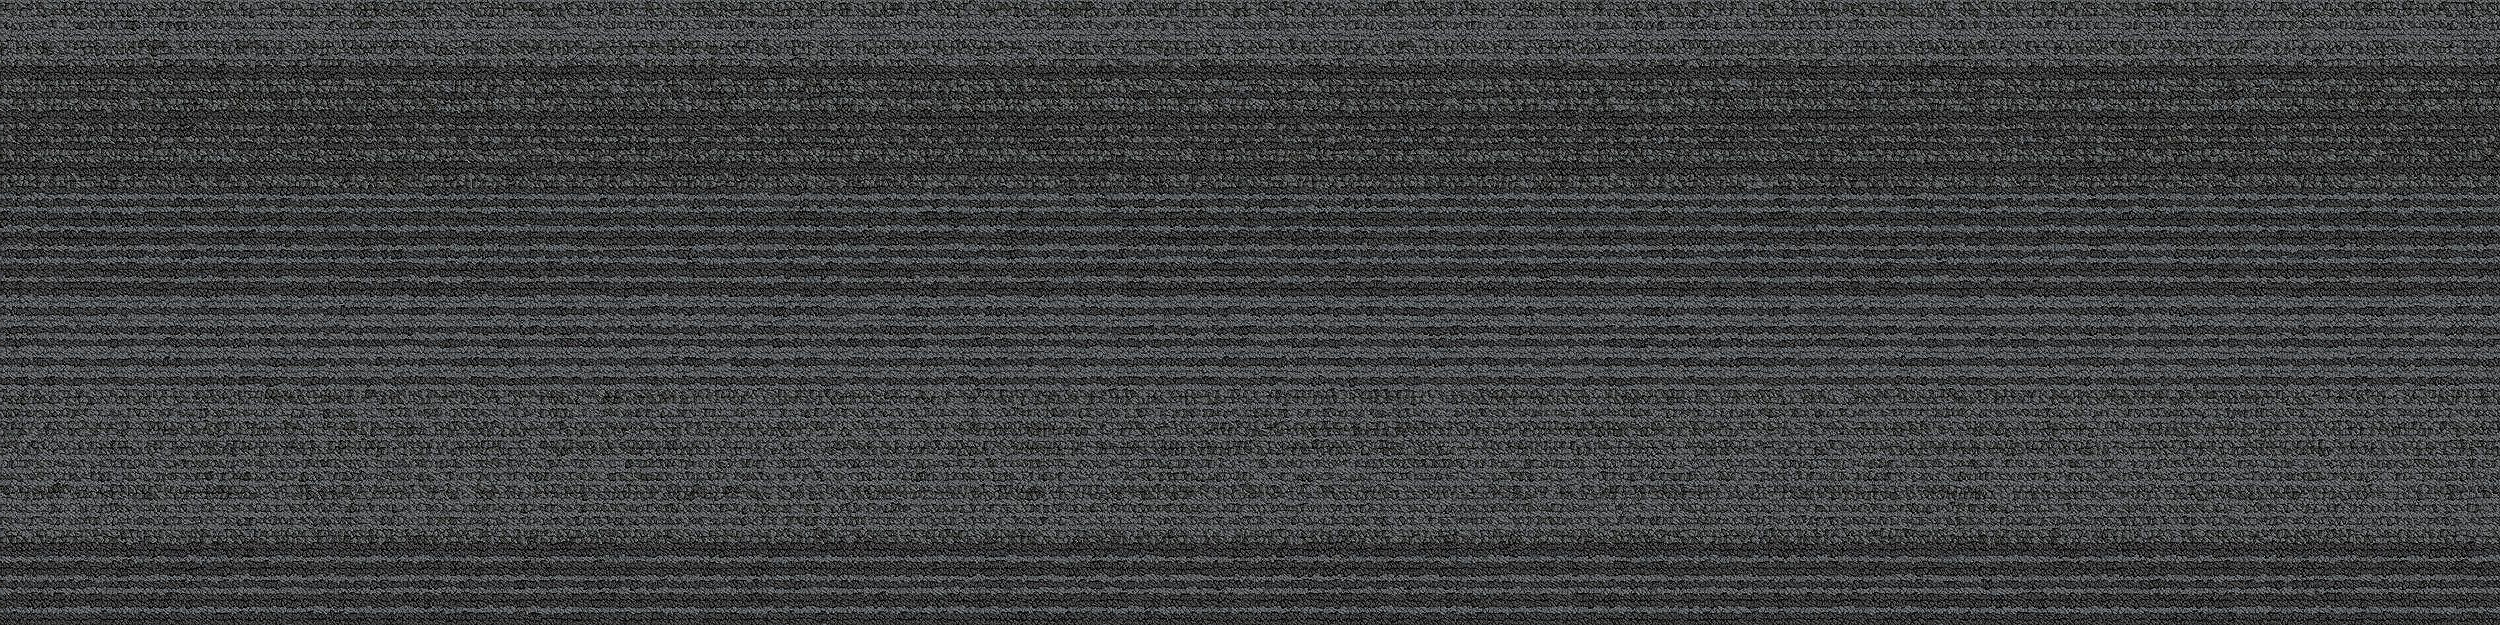 SS217 Carpet Tile In Passageway image number 6